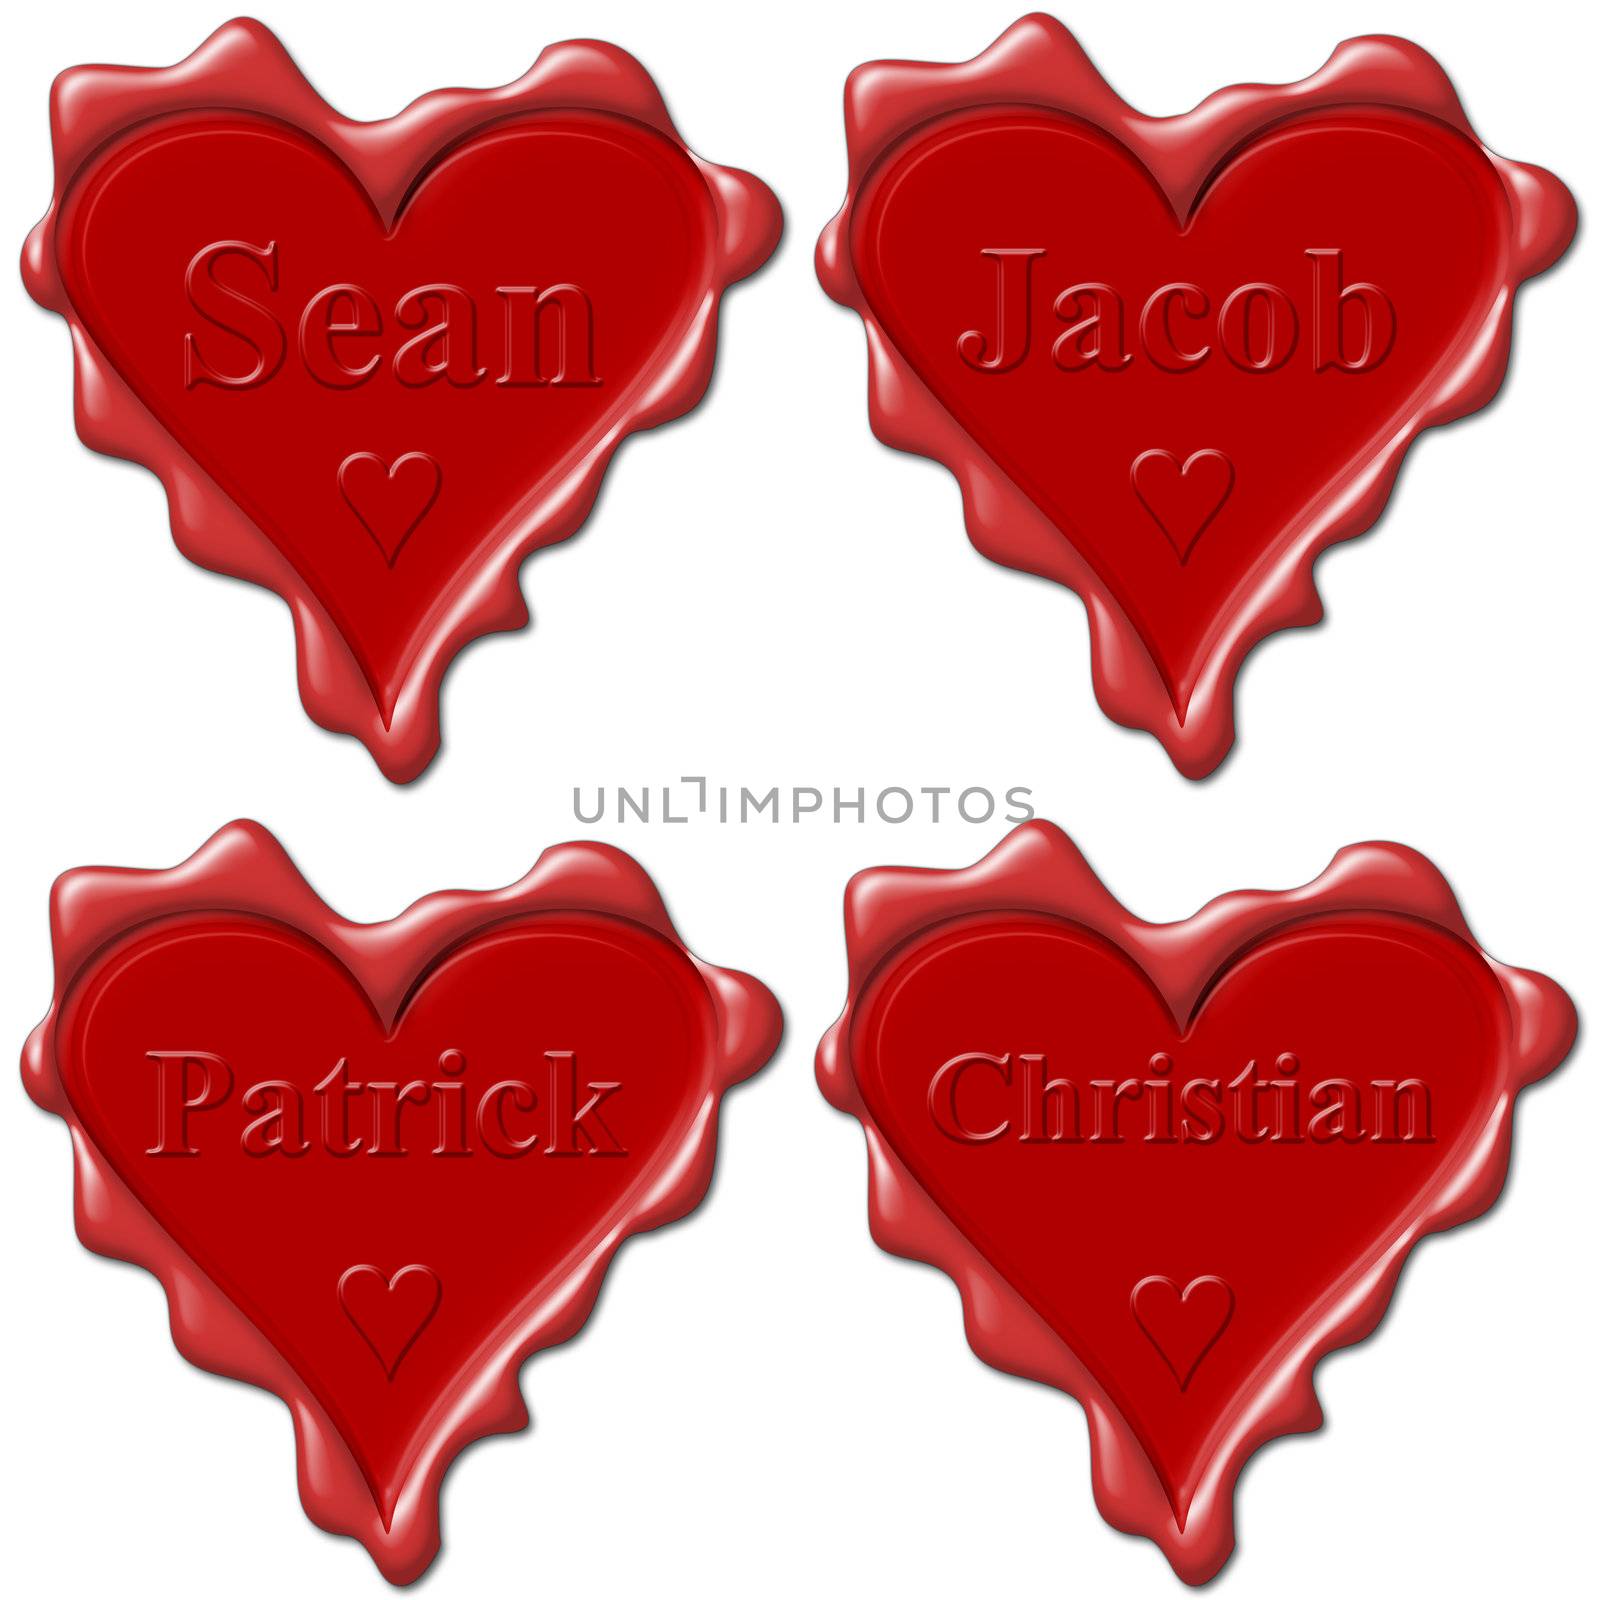 Valentine love hearts with names: Sean, Jacob, Patrick, Christian